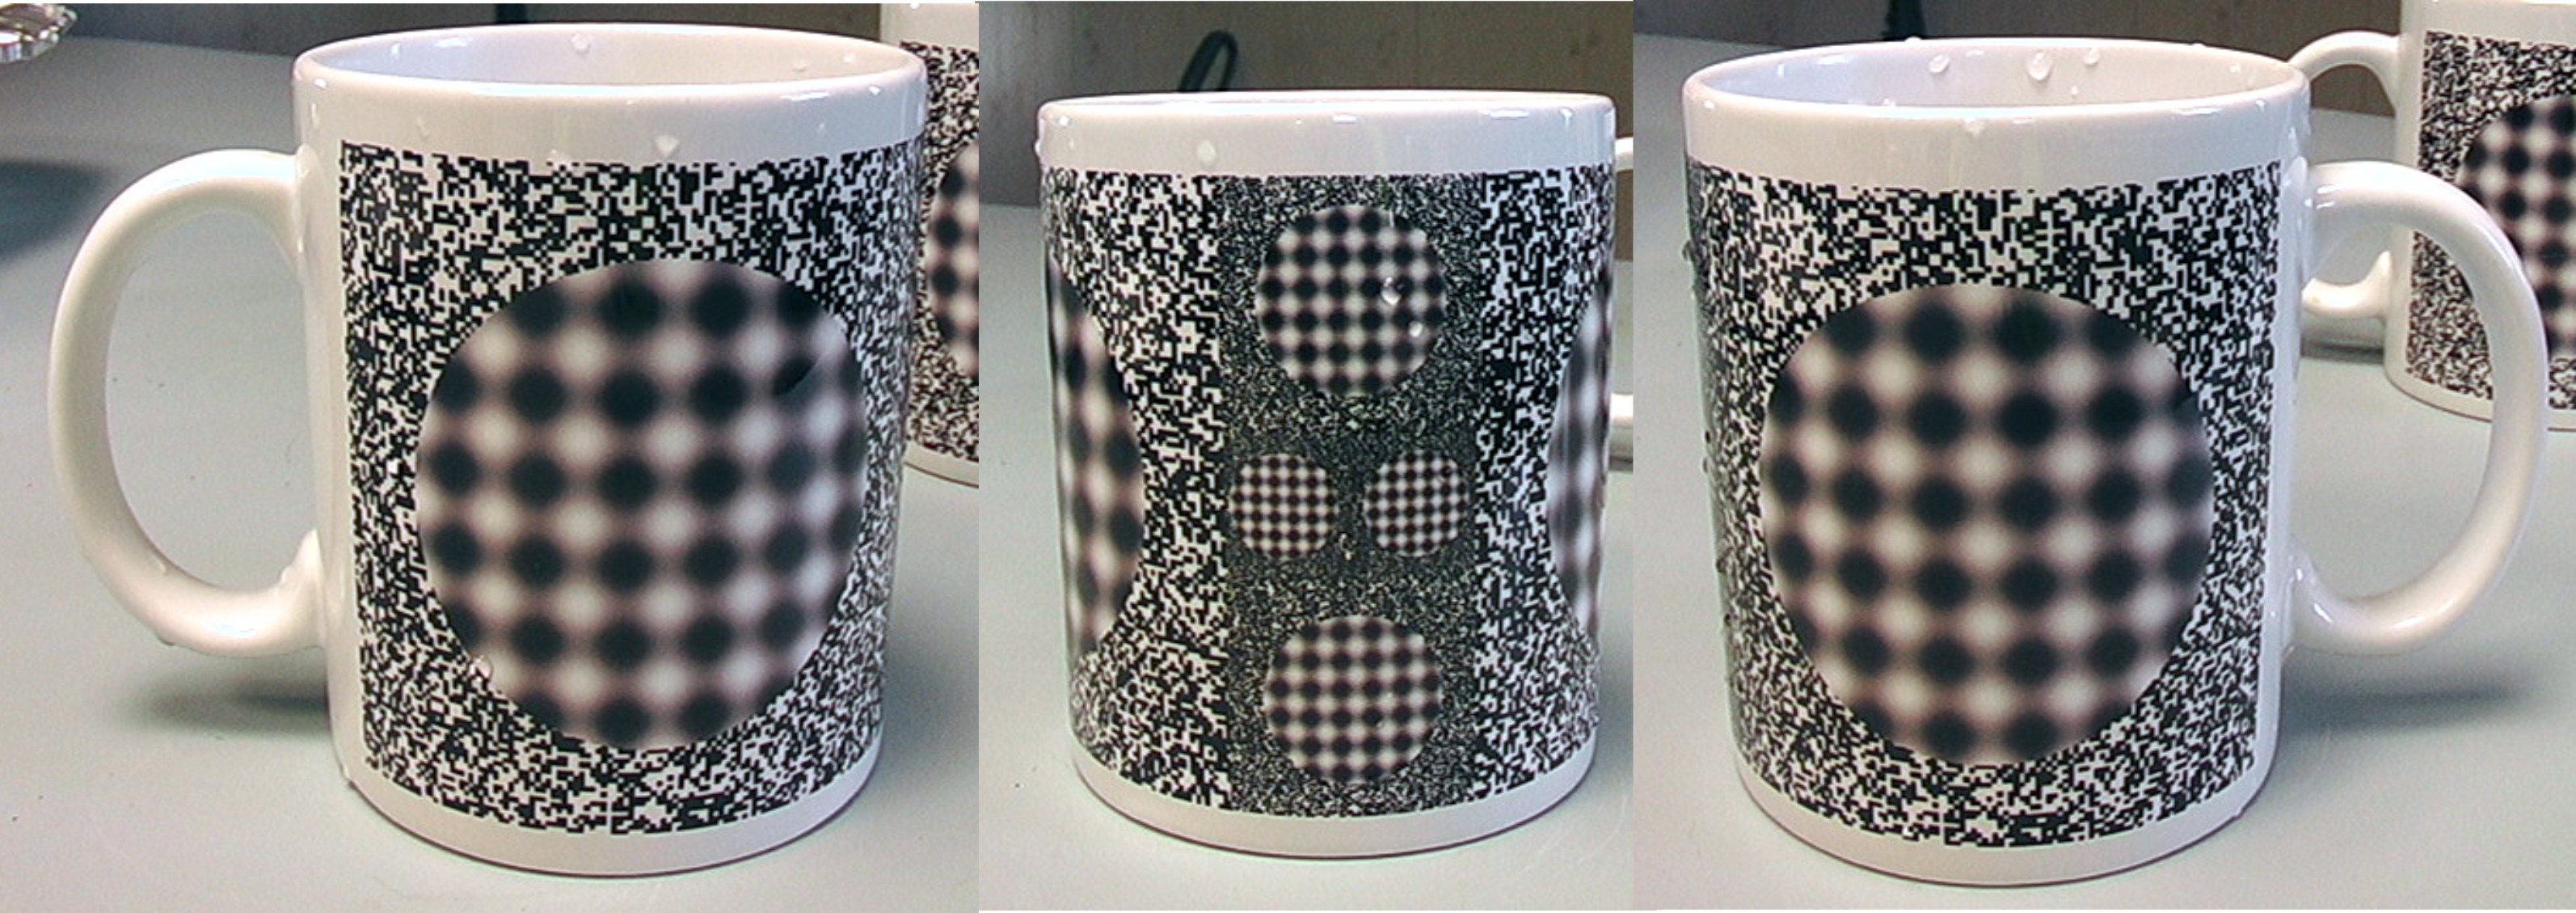 Illusion Mug made with sublimation printing